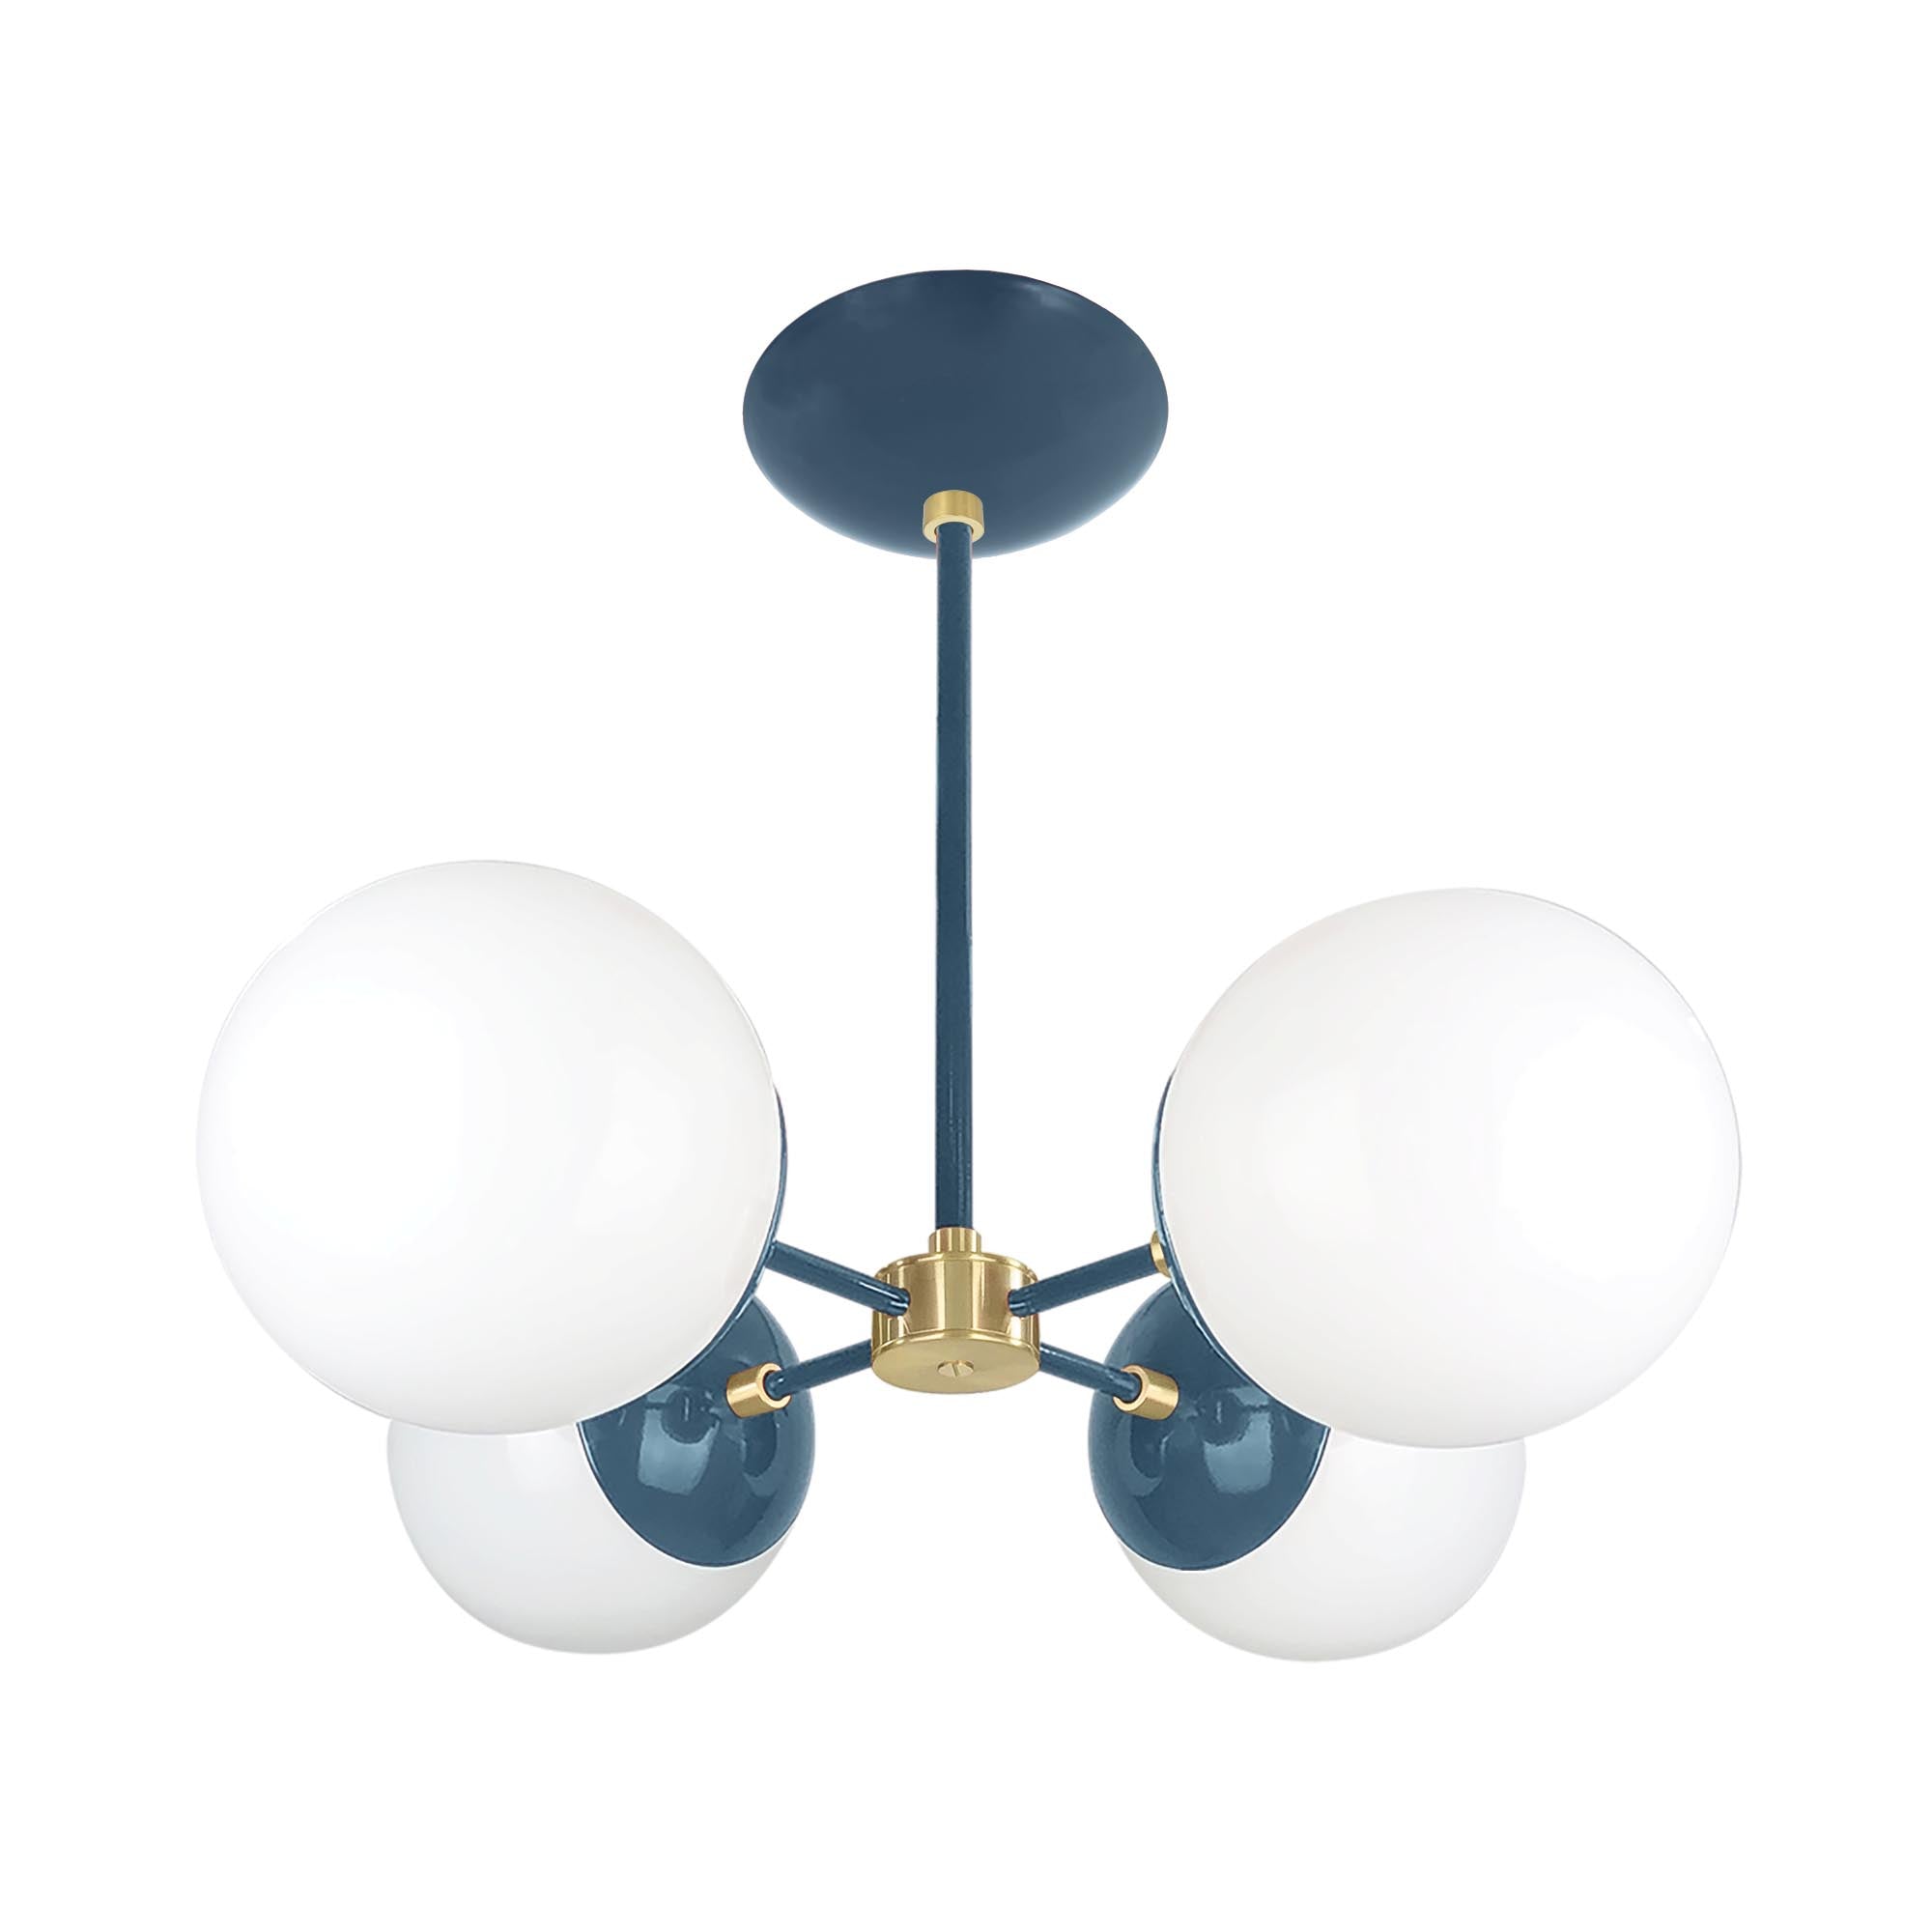 Brass and slate blue color Orbi chandelier Dutton Brown lighting